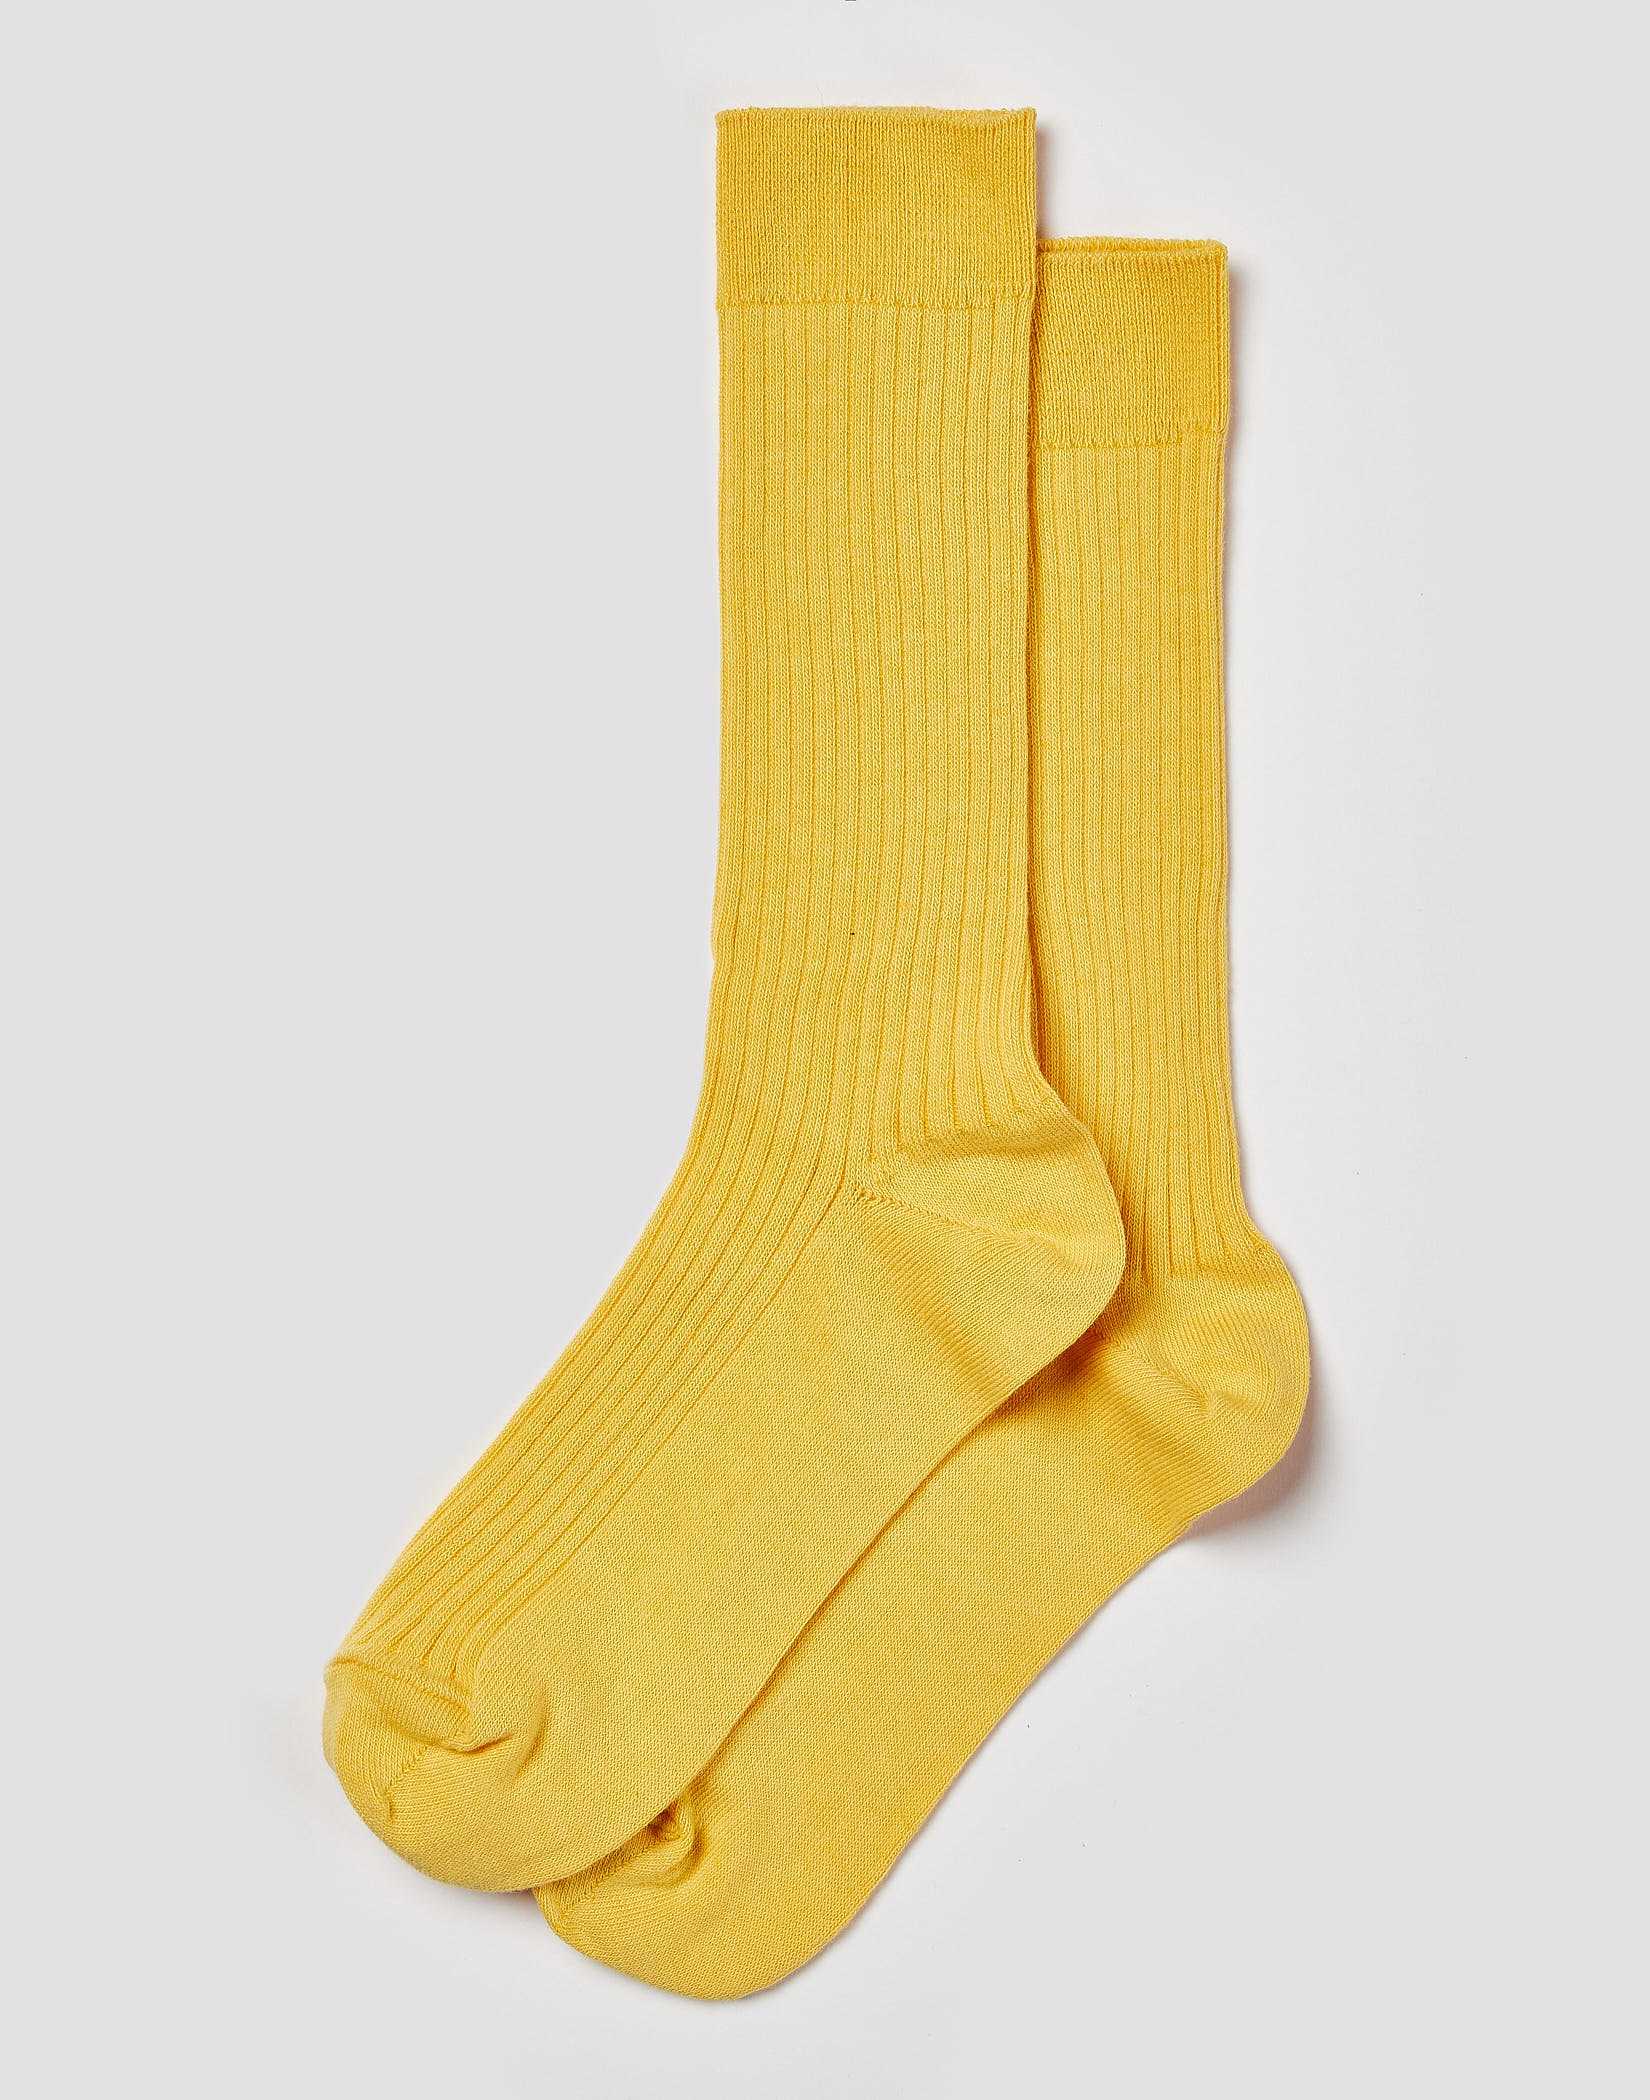 Men's Accessories | Classic Wool & Cotton Socks for Men - Joseph Turner